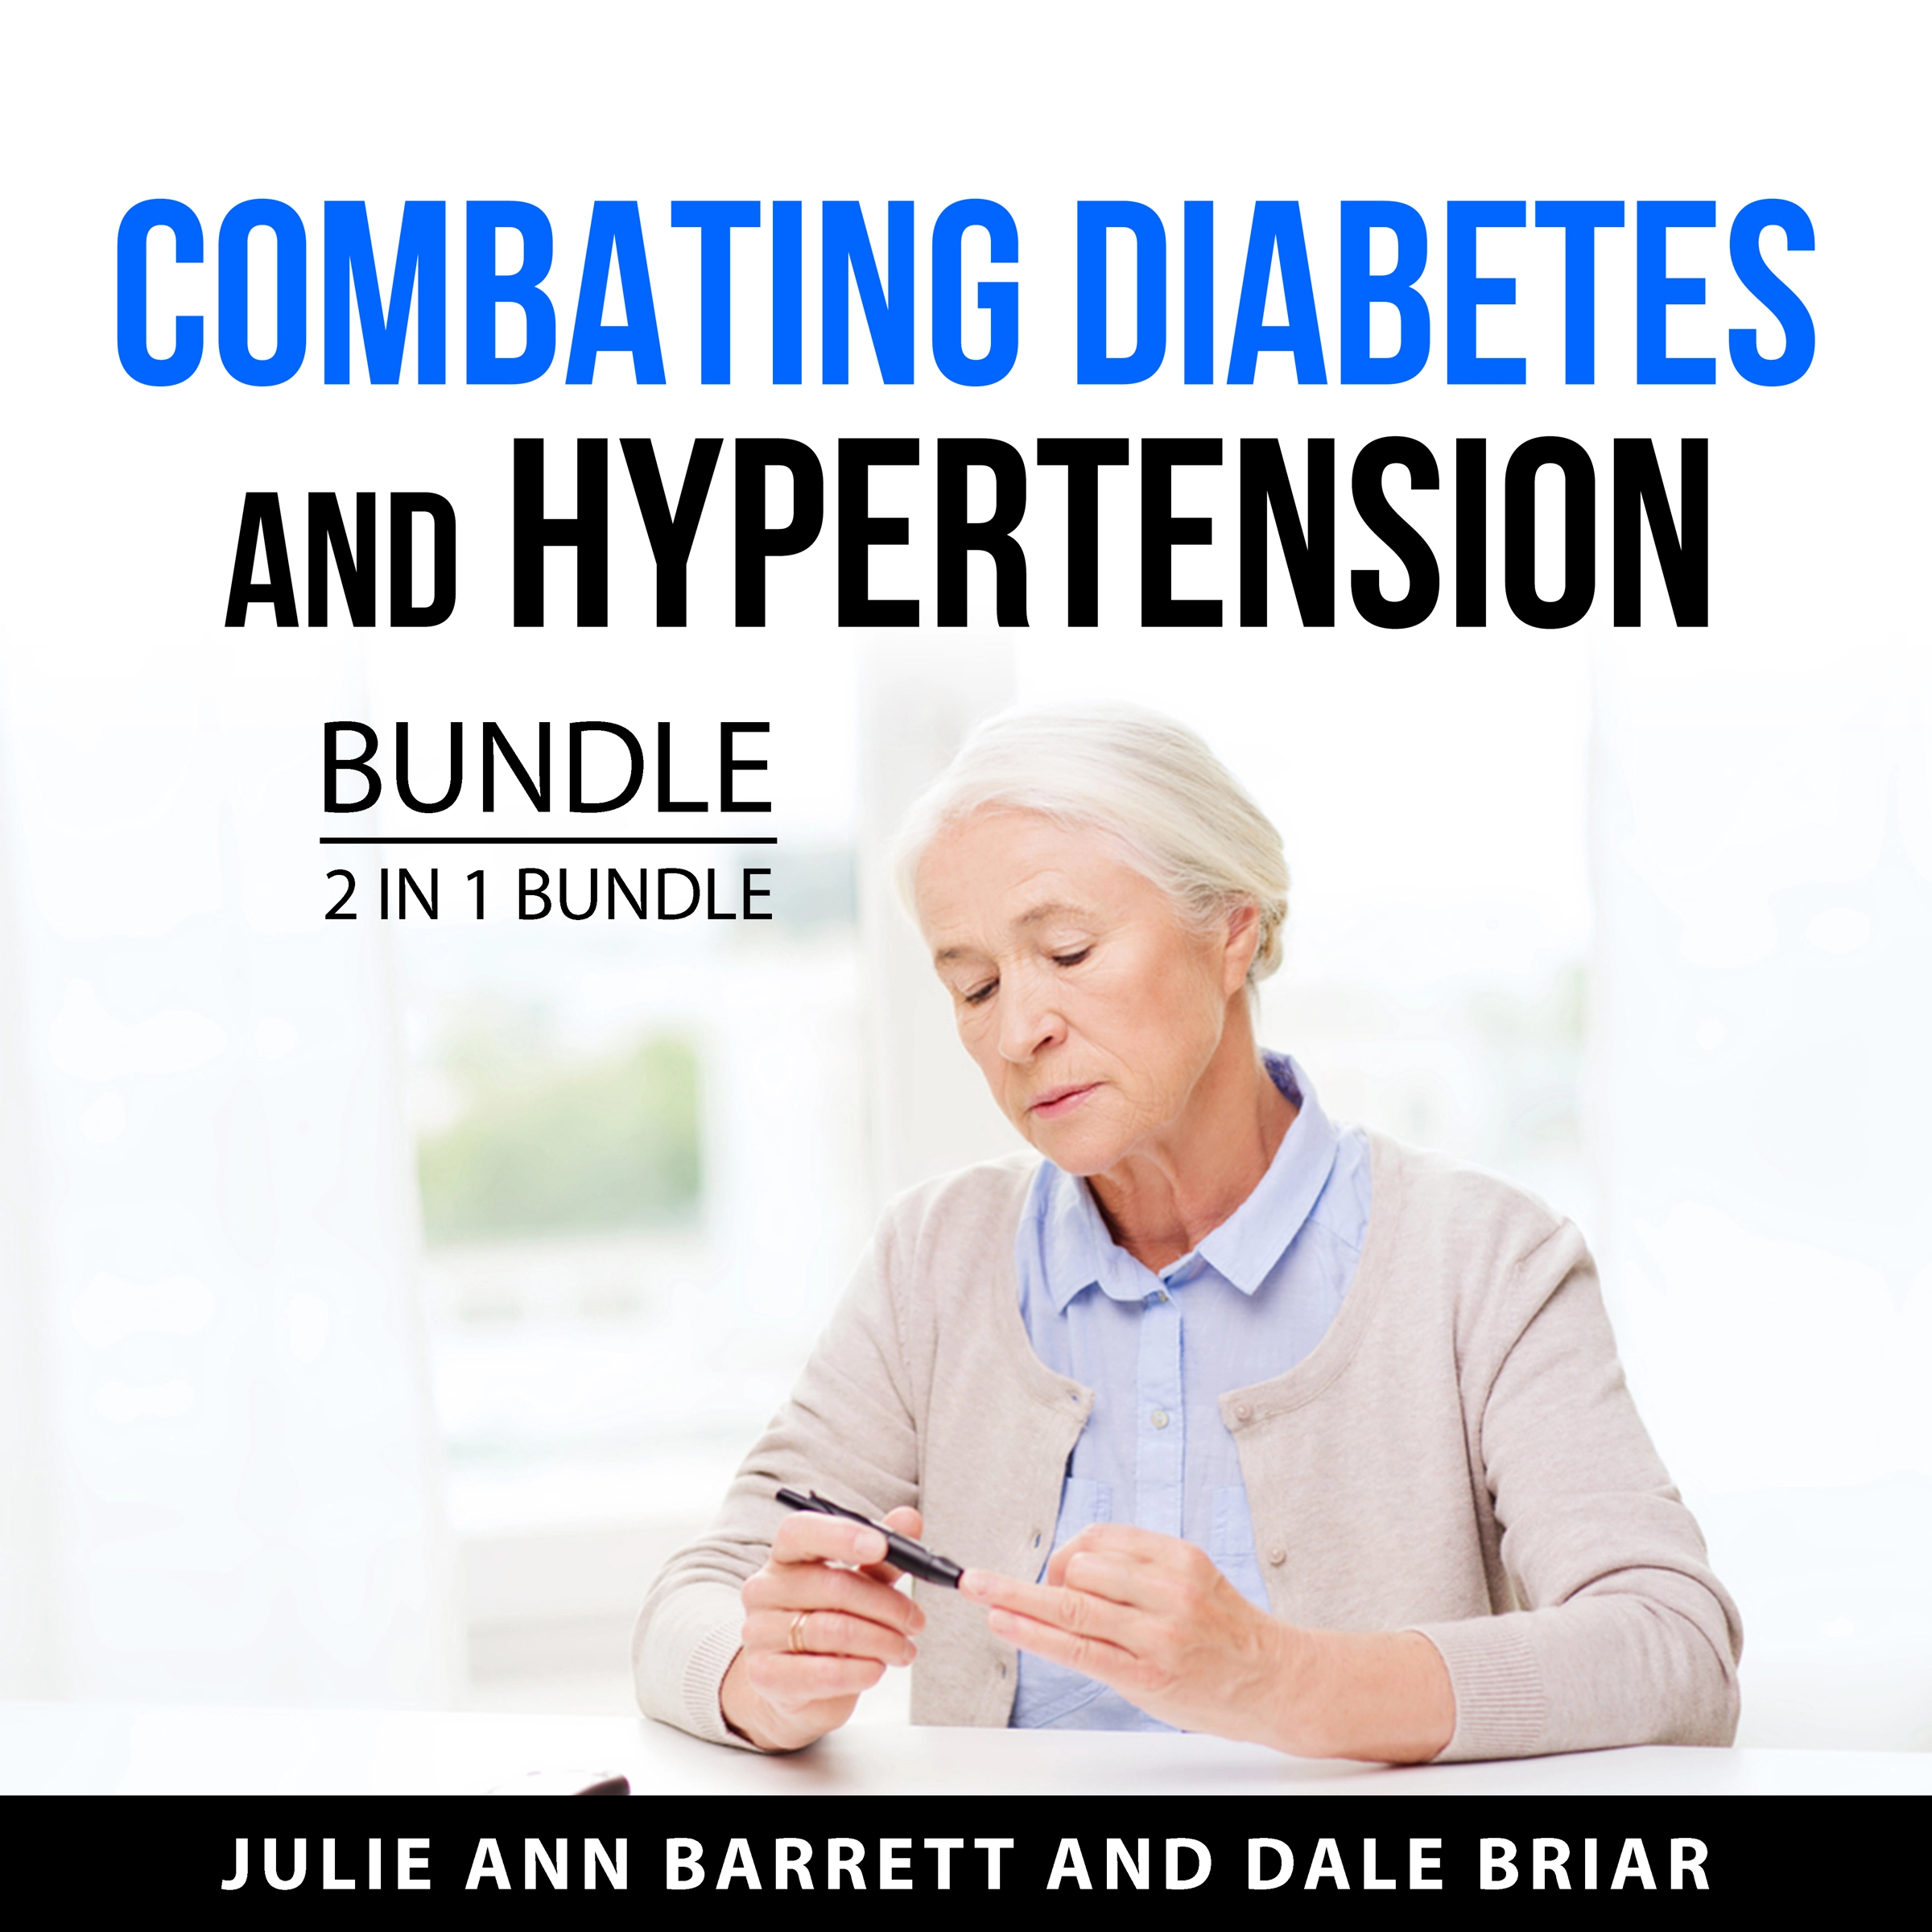 Combating Diabetes and Hypertension Bundle, 2 in 1 Bundle Audiobook by Dale Briar